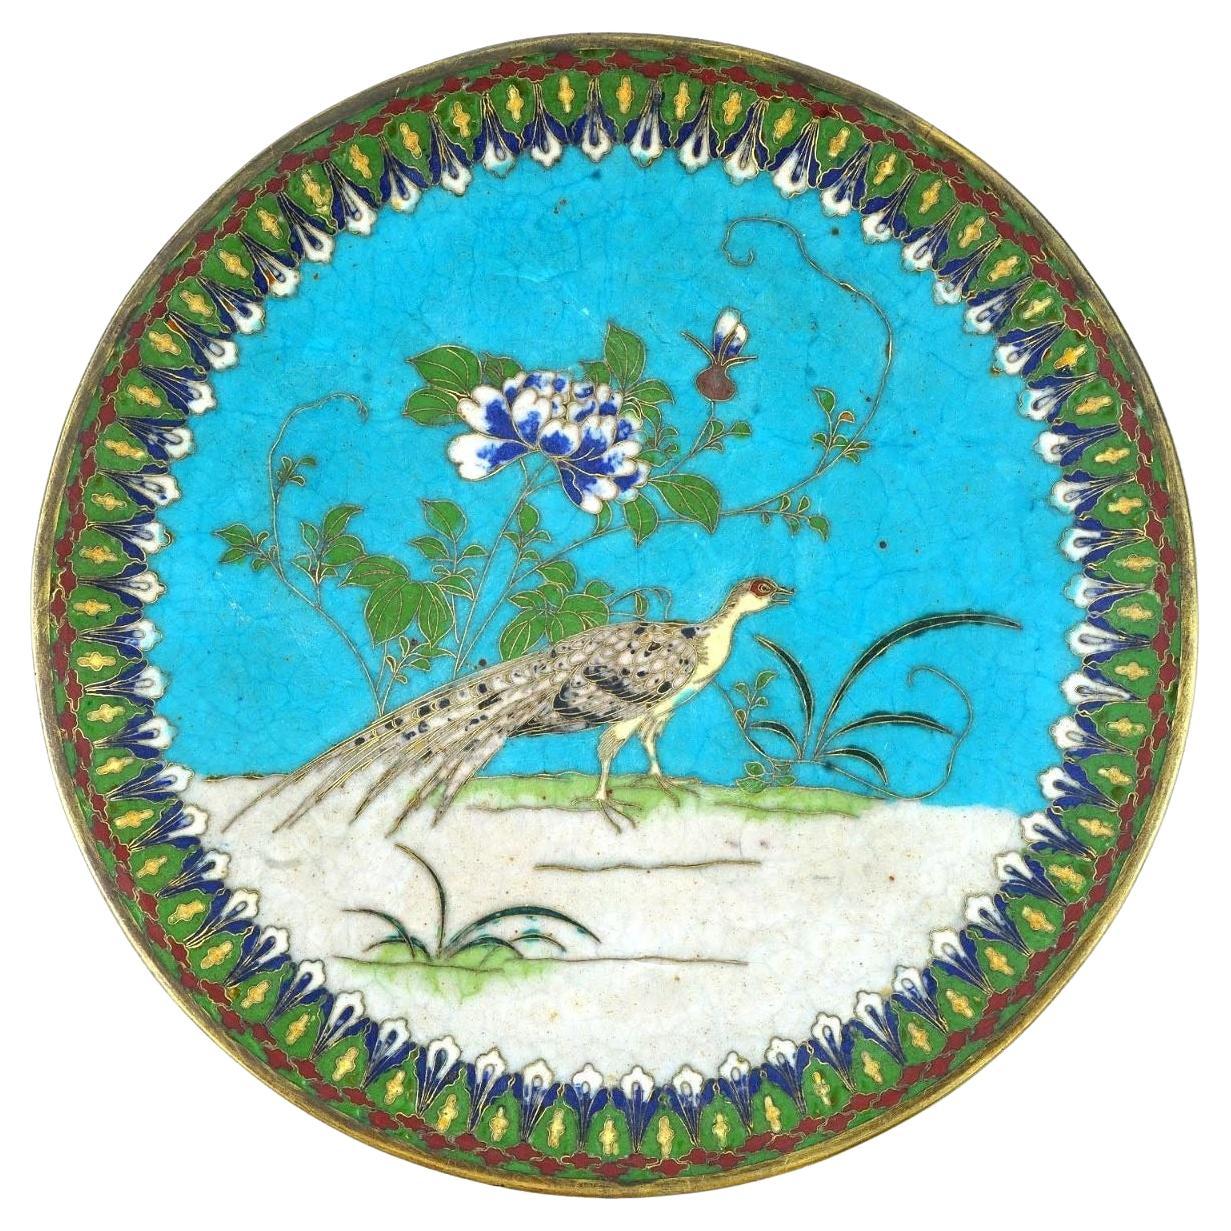 19th Century Cloisonne Enamel Plate Depicting Peacock